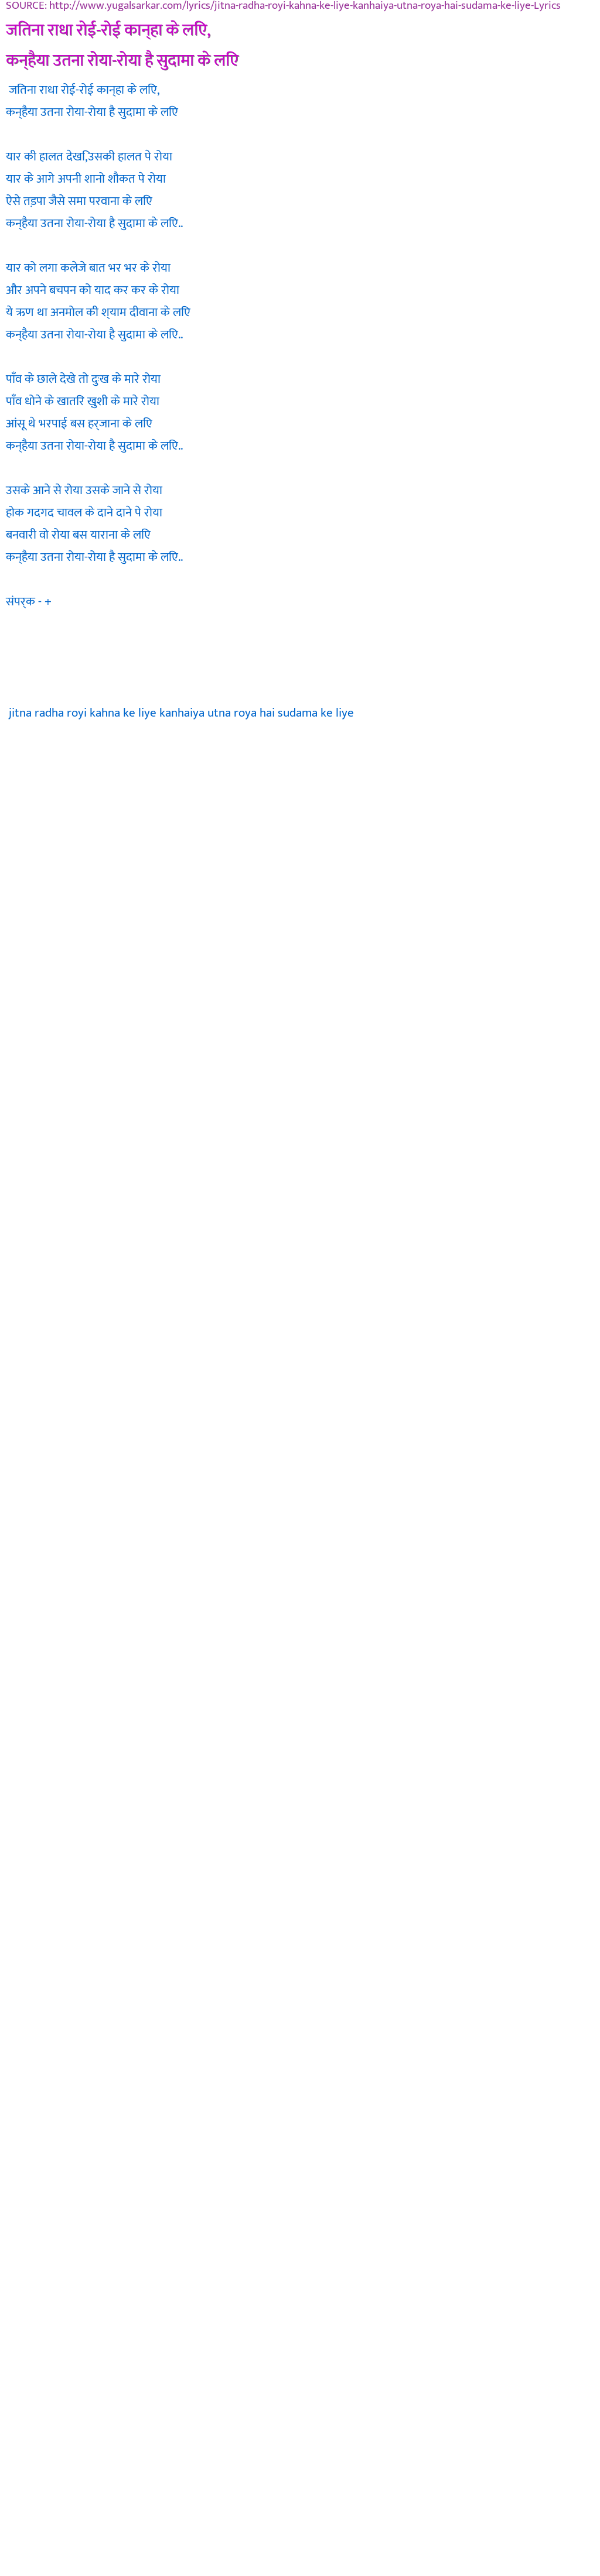 Lyrics à¤ à¤¤à¤¨ à¤° à¤§ à¤° à¤ à¤° à¤ à¤ à¤¨ à¤¹ à¤ à¤² à¤ à¤à¤¨ à¤¹ à¤¯ à¤à¤¤à¤¨ à¤° à¤¯ à¤° à¤¯ à¤¹ à¤¸ à¤¦ à¤® à¤ à¤² à¤ Jitna Radha Royi Kahna Ke Liye Kanhaiya Utna Roya Hai Sudama Ke Liye Jitna radha roee with lyrics i krishna bhajan i saurabh madhukar i bataao kahan milega shyam 7 download. lyrics à¤ à¤¤à¤¨ à¤° à¤§ à¤° à¤ à¤° à¤